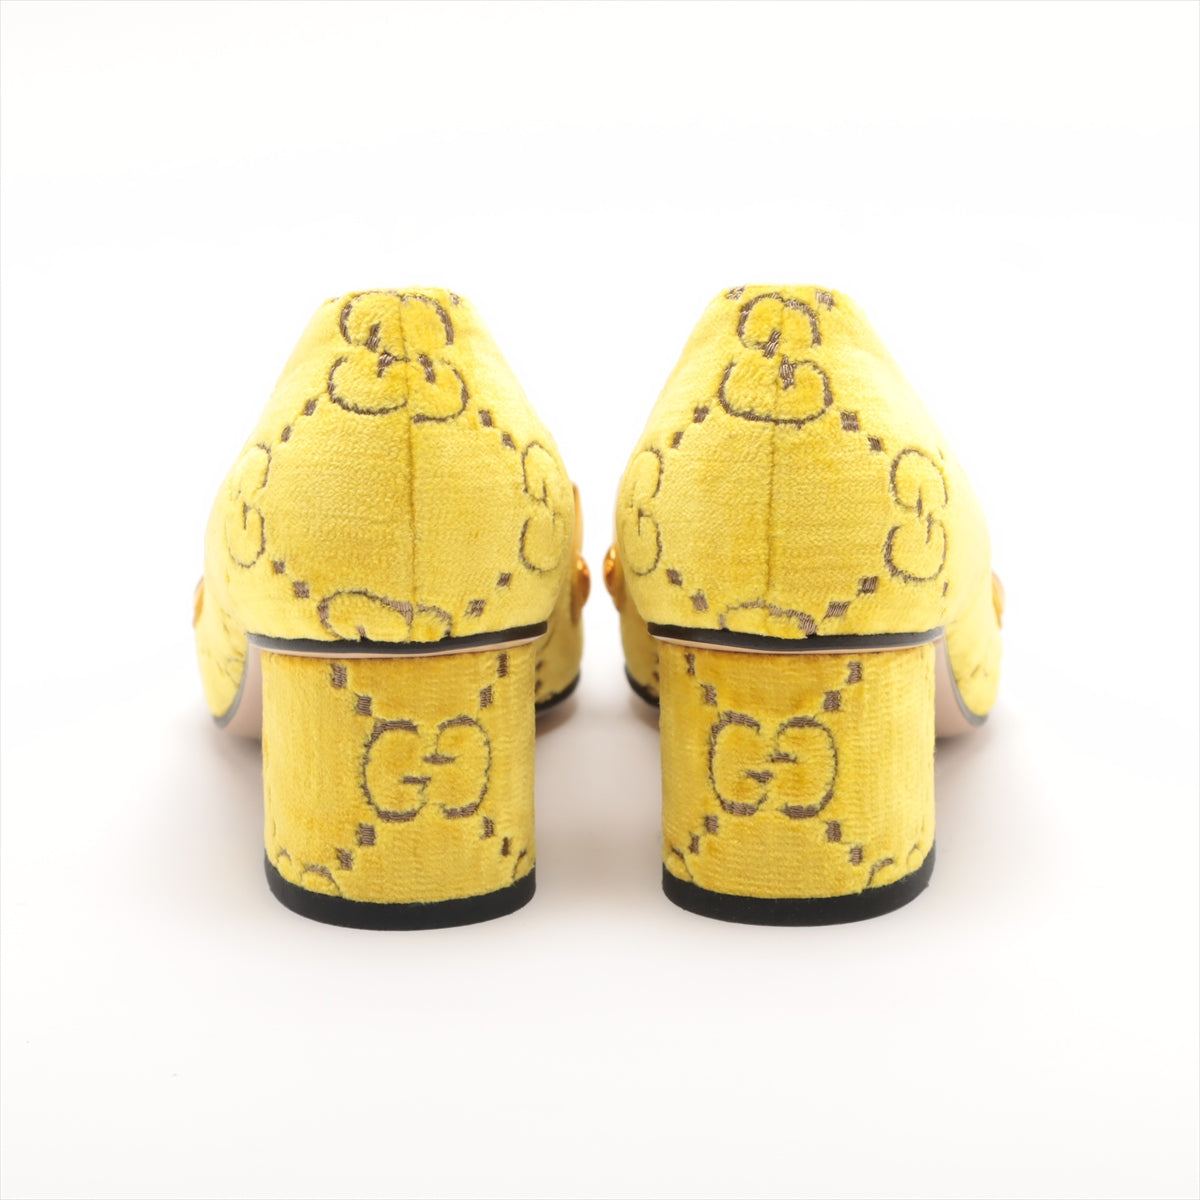 Gucci Velour Pumps 36 Ladies' Yellow 525085 Sylvie GG pattern